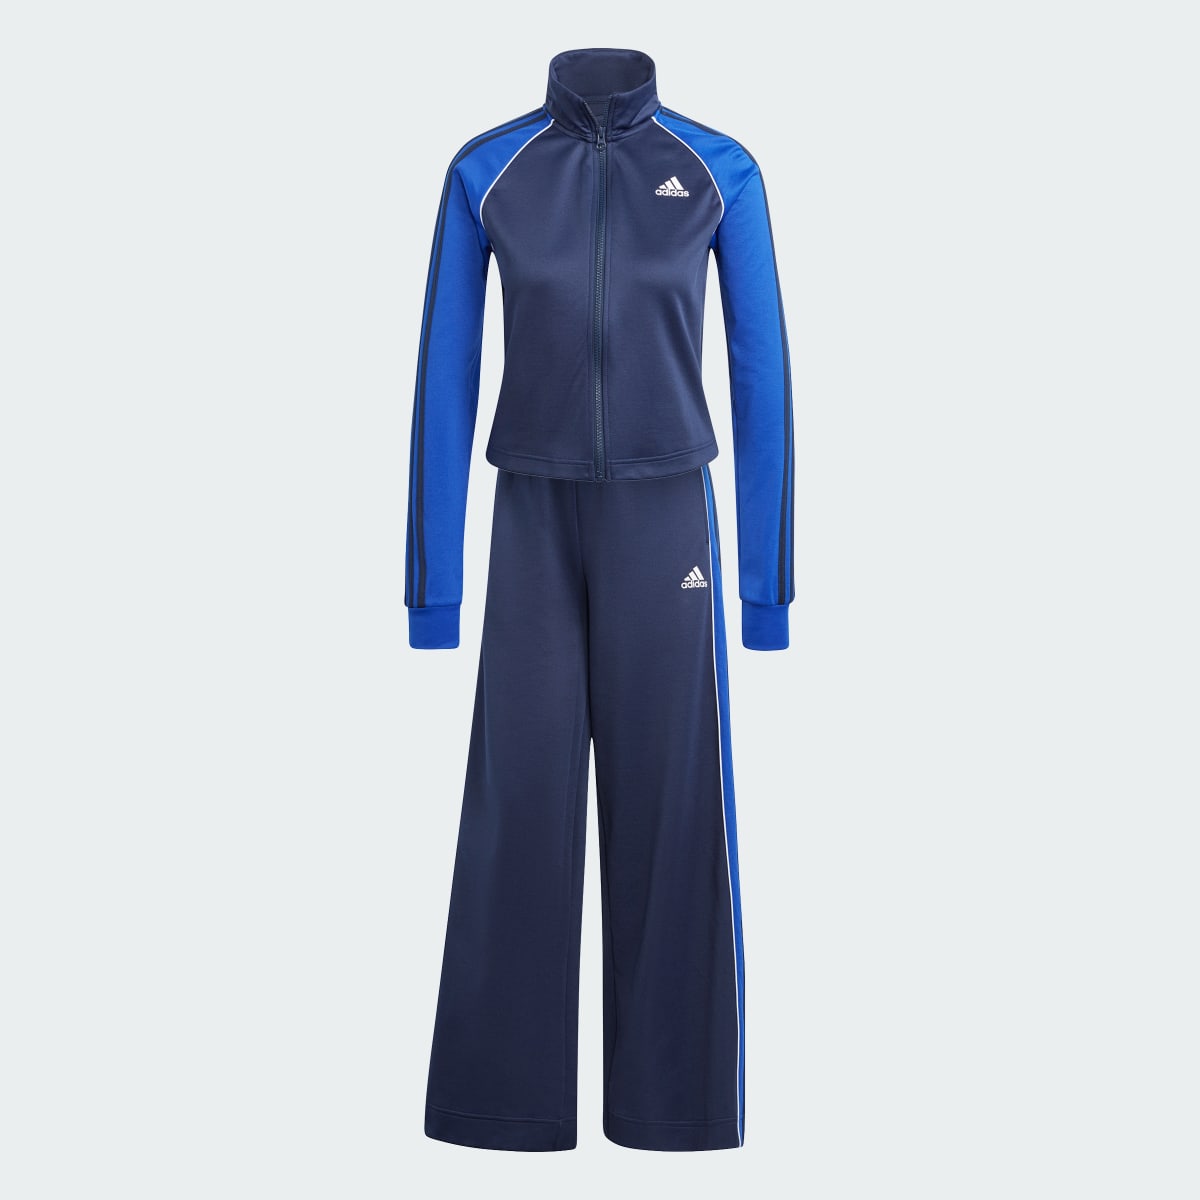 Adidas Track suit Teamsport. 5